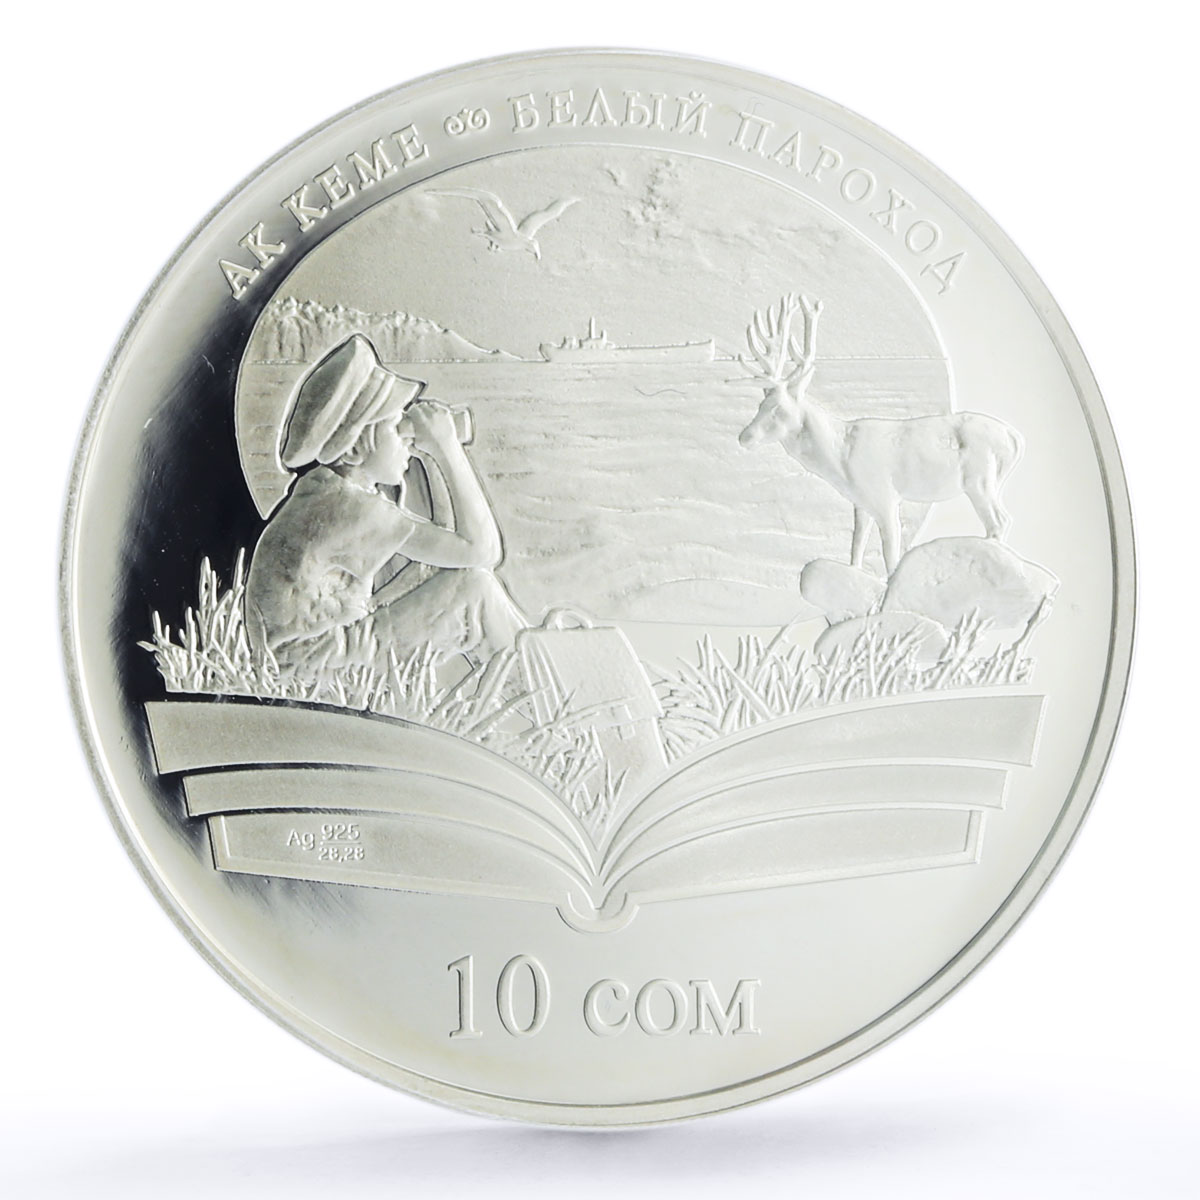 Kyrgyzstan 10 som Chinqiz Aitmatov White Ship Deer PR70 PCGS silver coin 2009